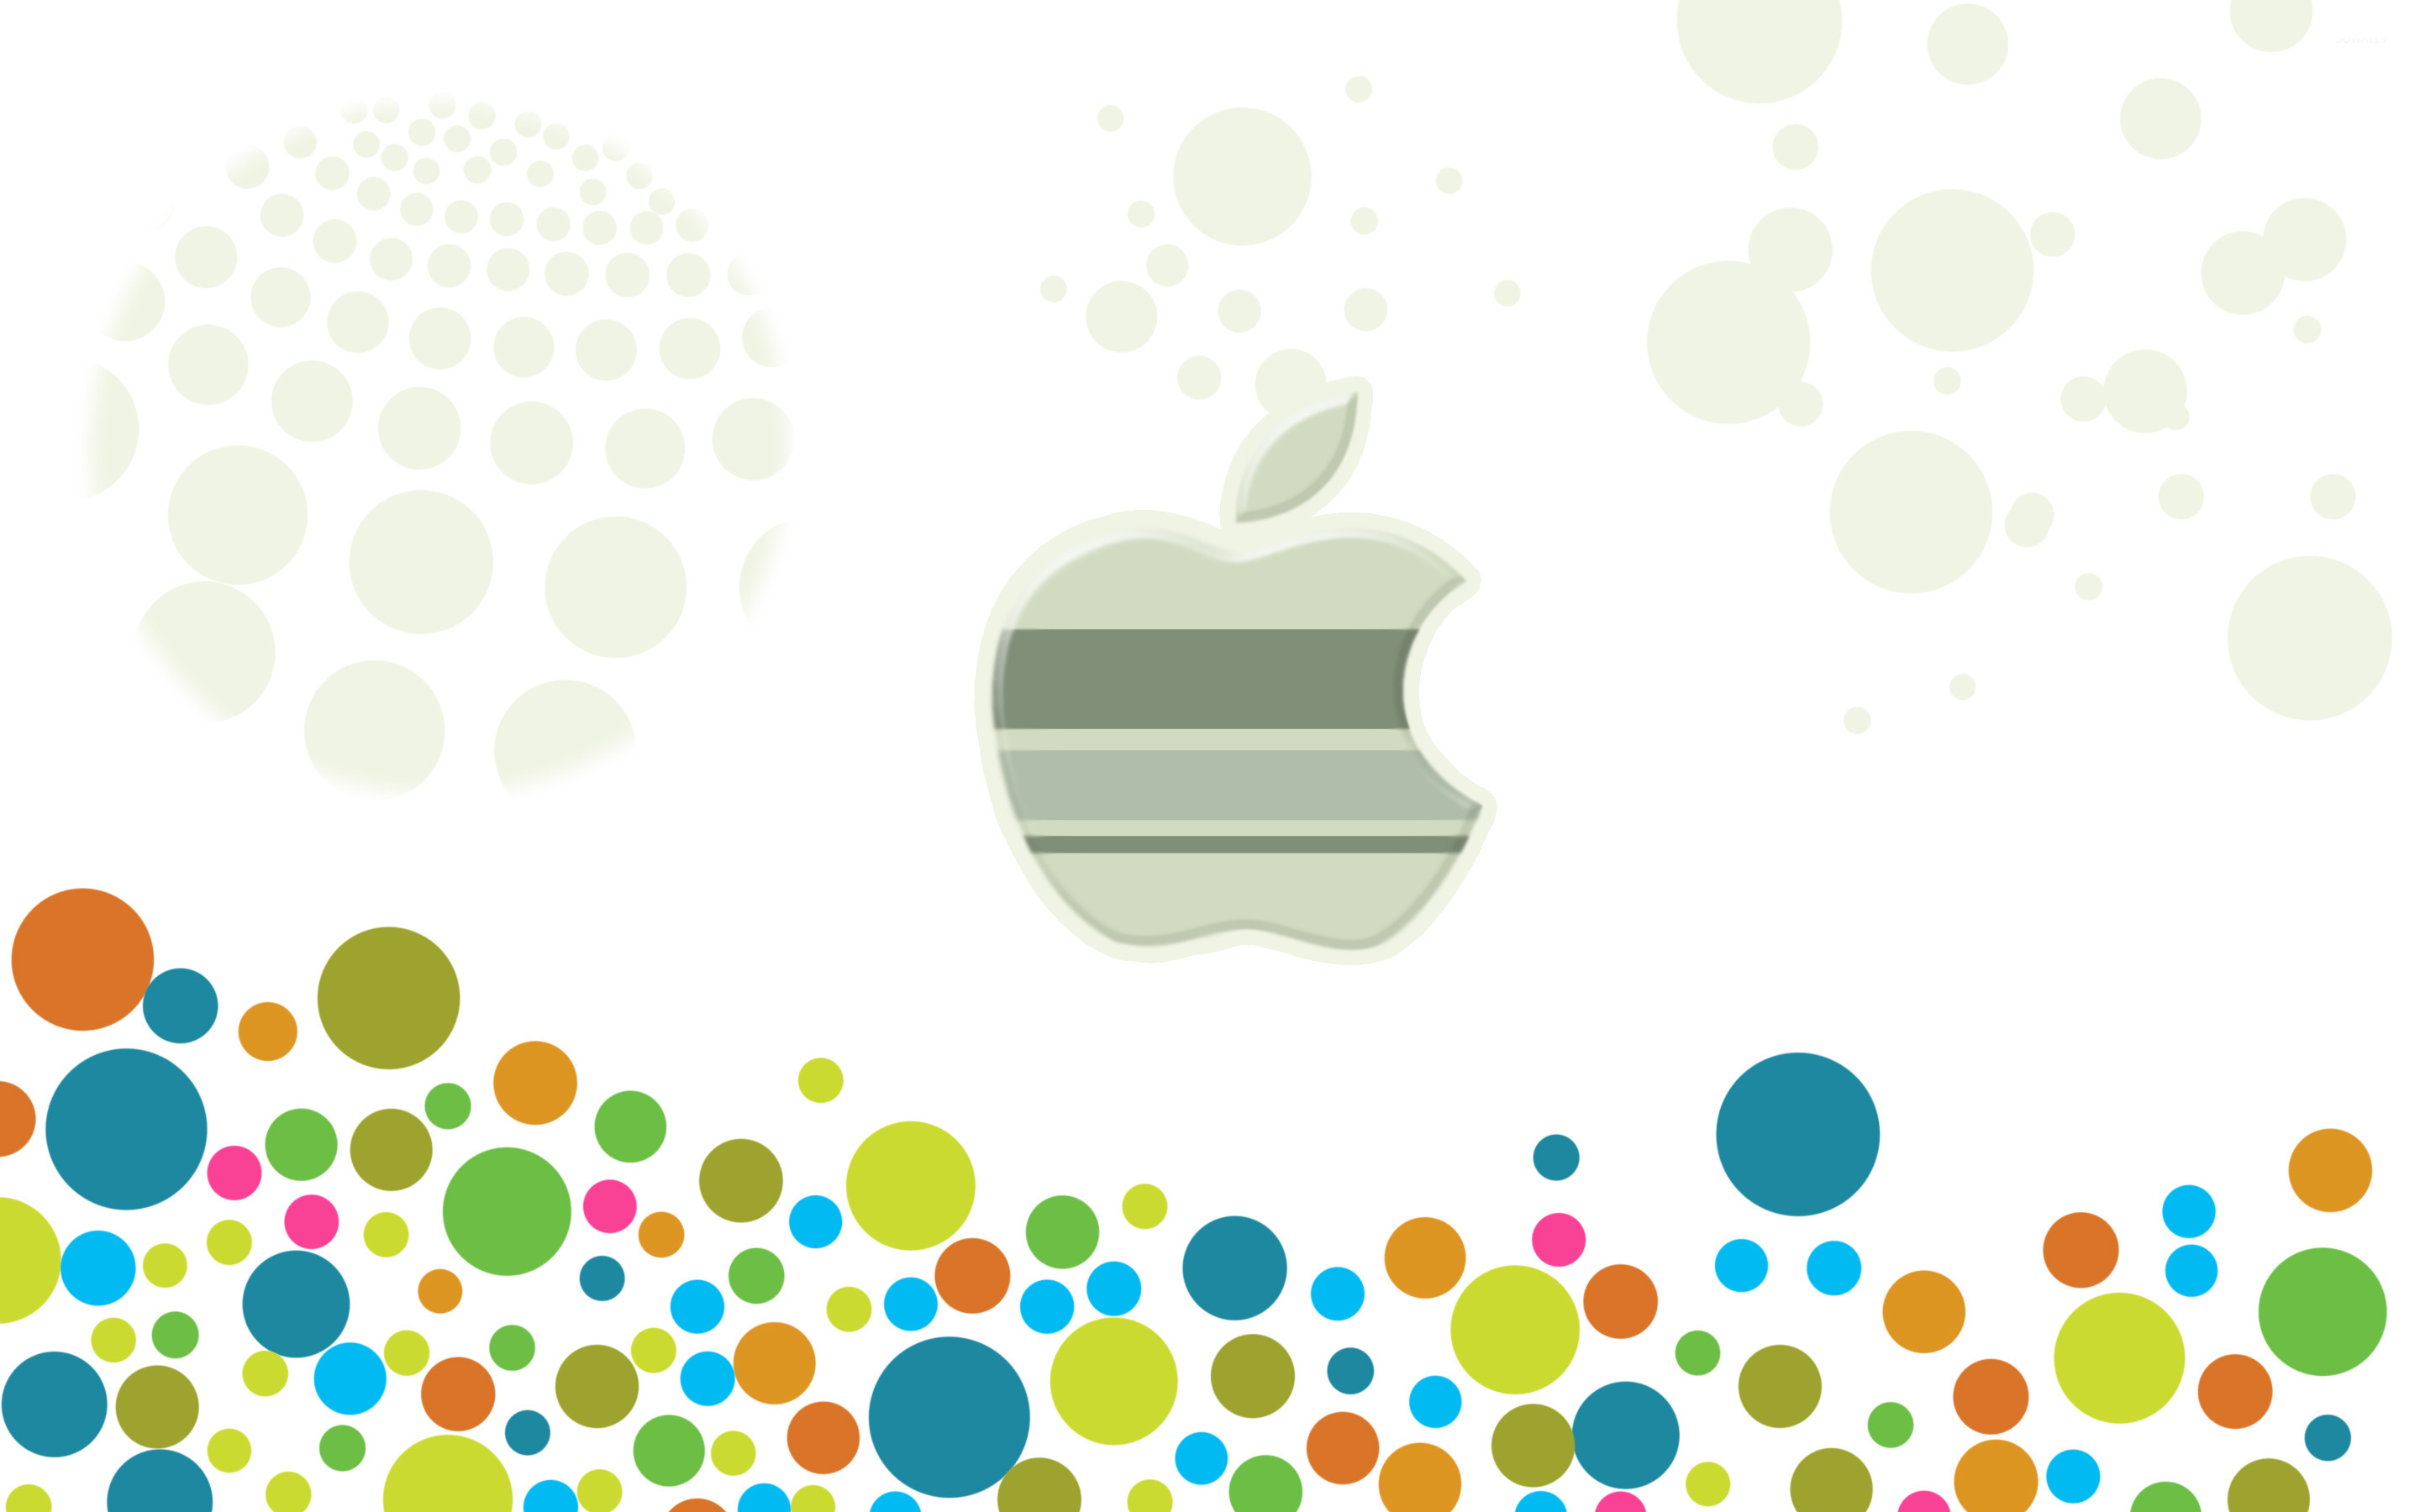 Apple logo among multicolored circles wallpaper - Computer wallpapers -  #21818